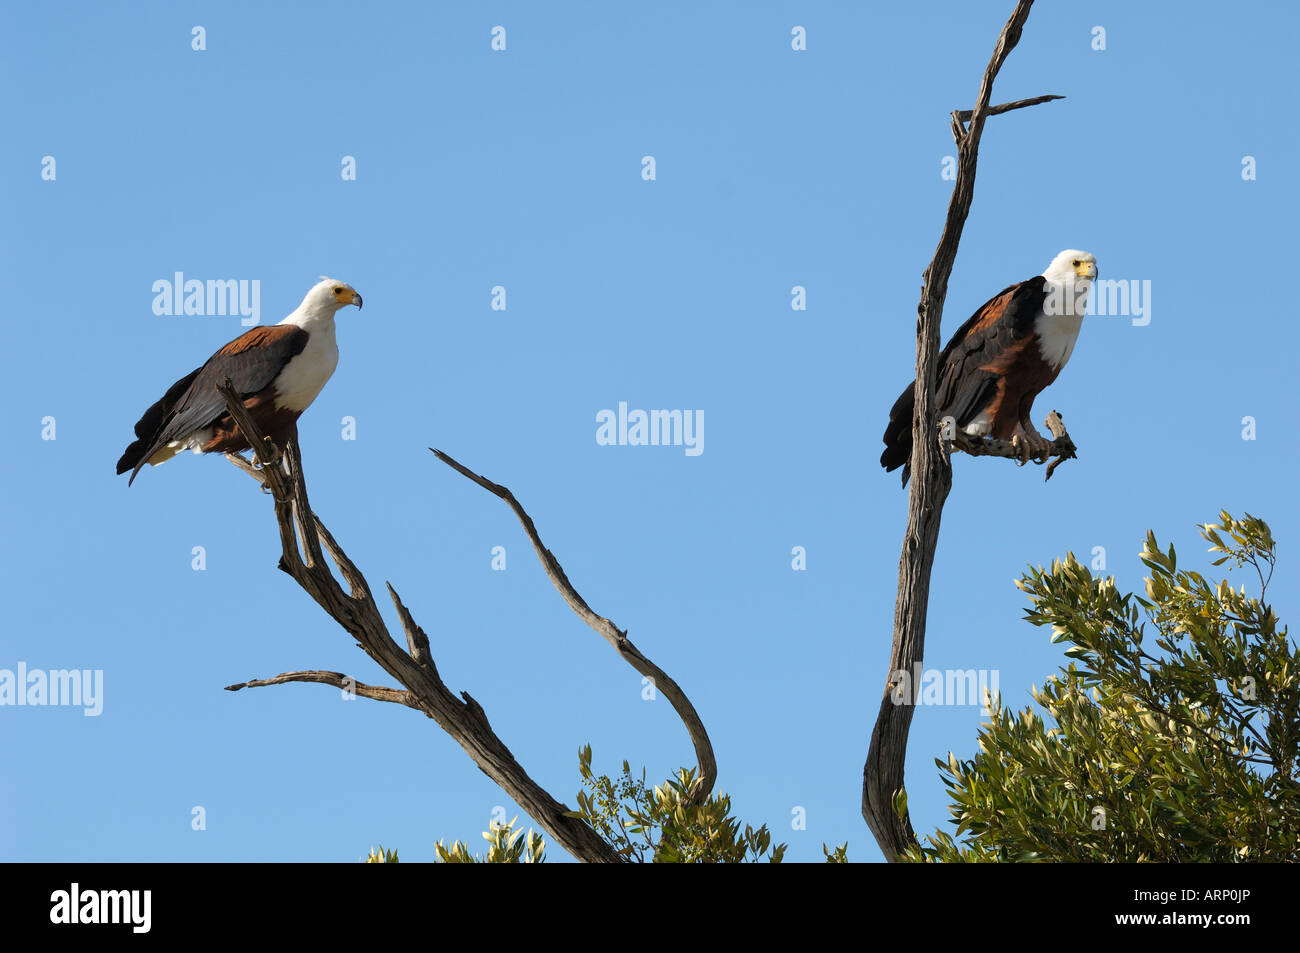 Bald eagles,a pair of bald eagles in a tree,Masai Mara,Kenya Stock Photo